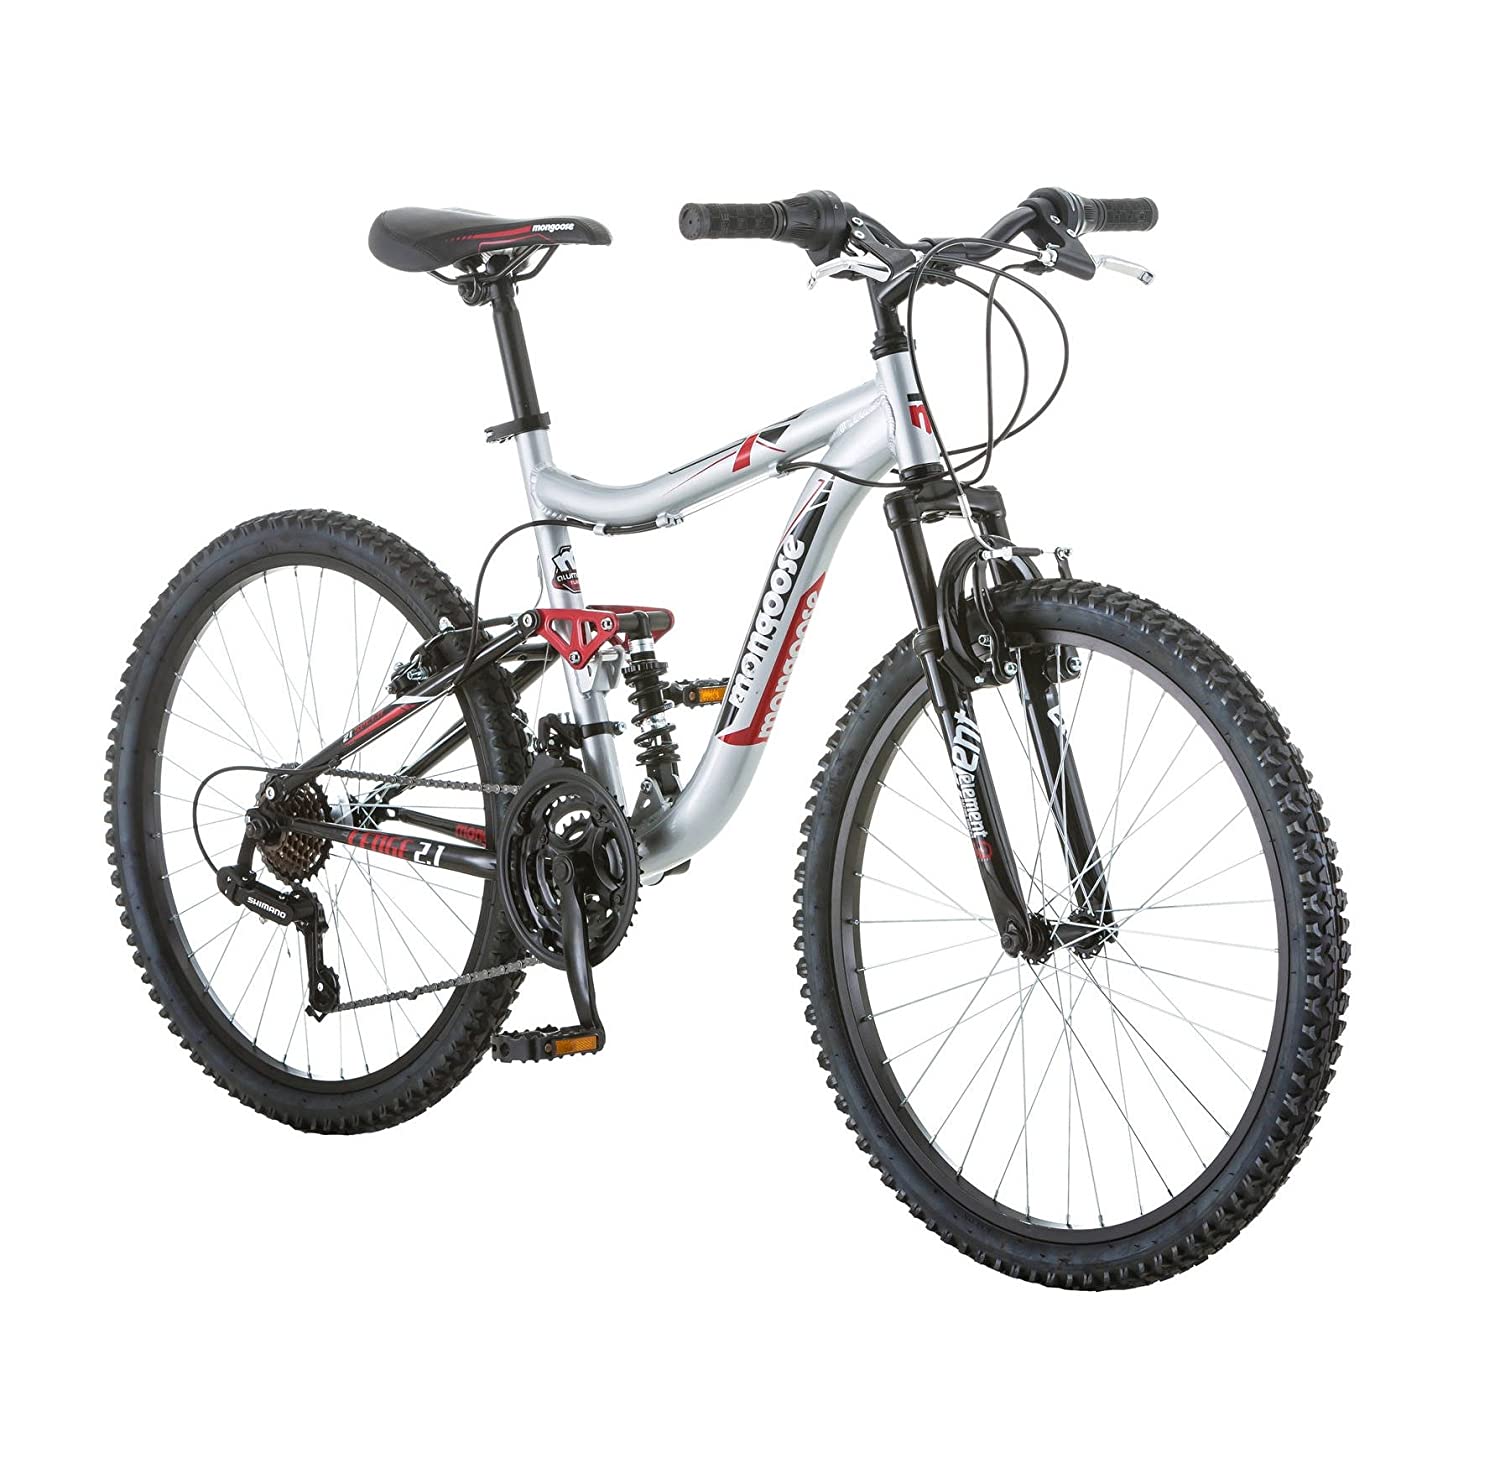 24" Mongoose Ledge 2.1 Boys' Mountain Bike, Silver/Red